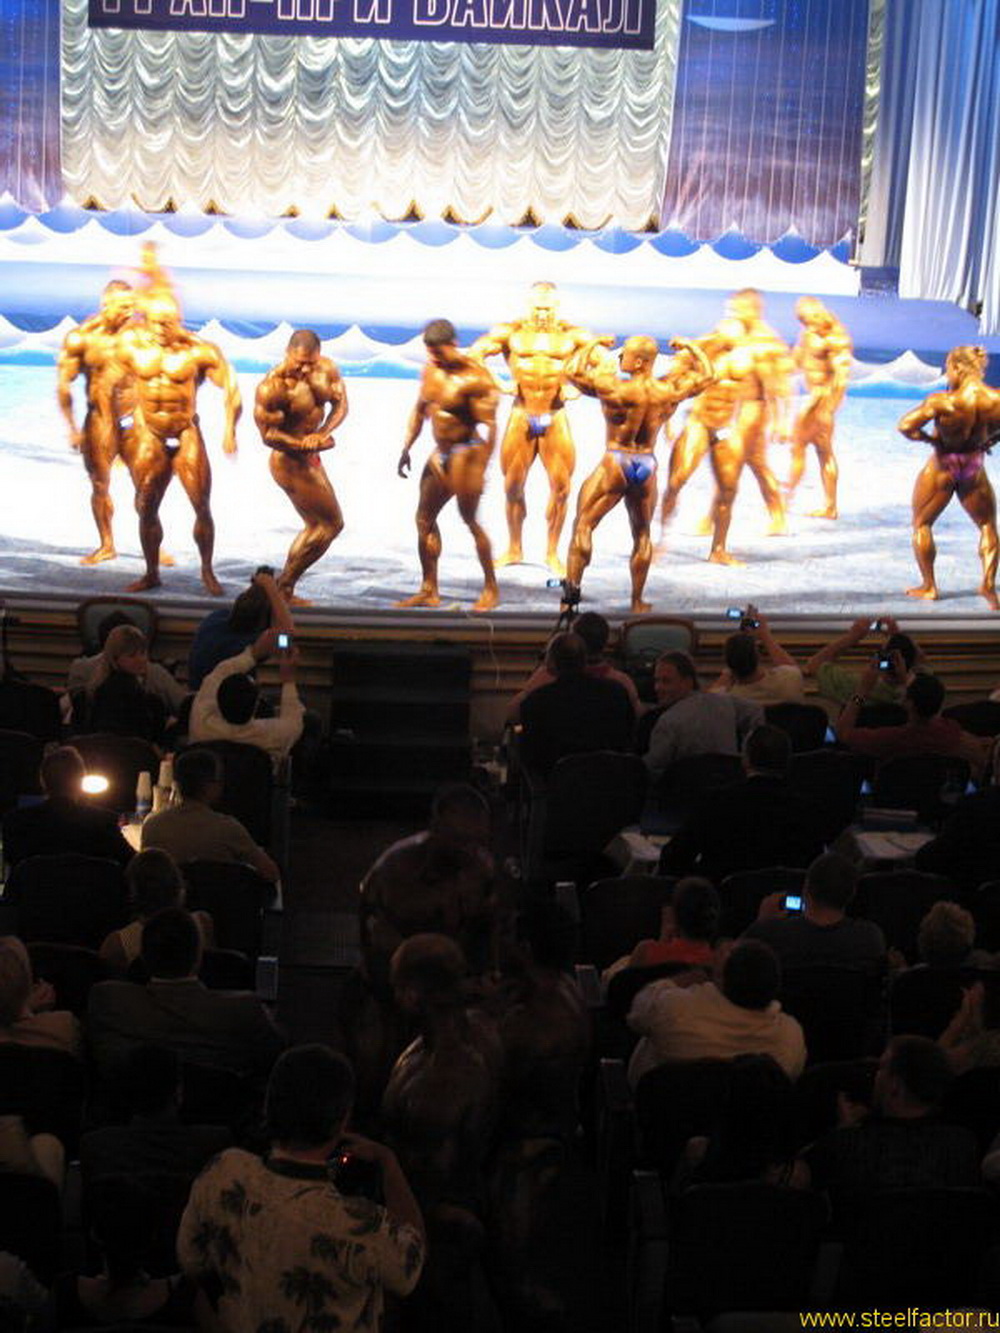 Гран-при Байкал - 2008